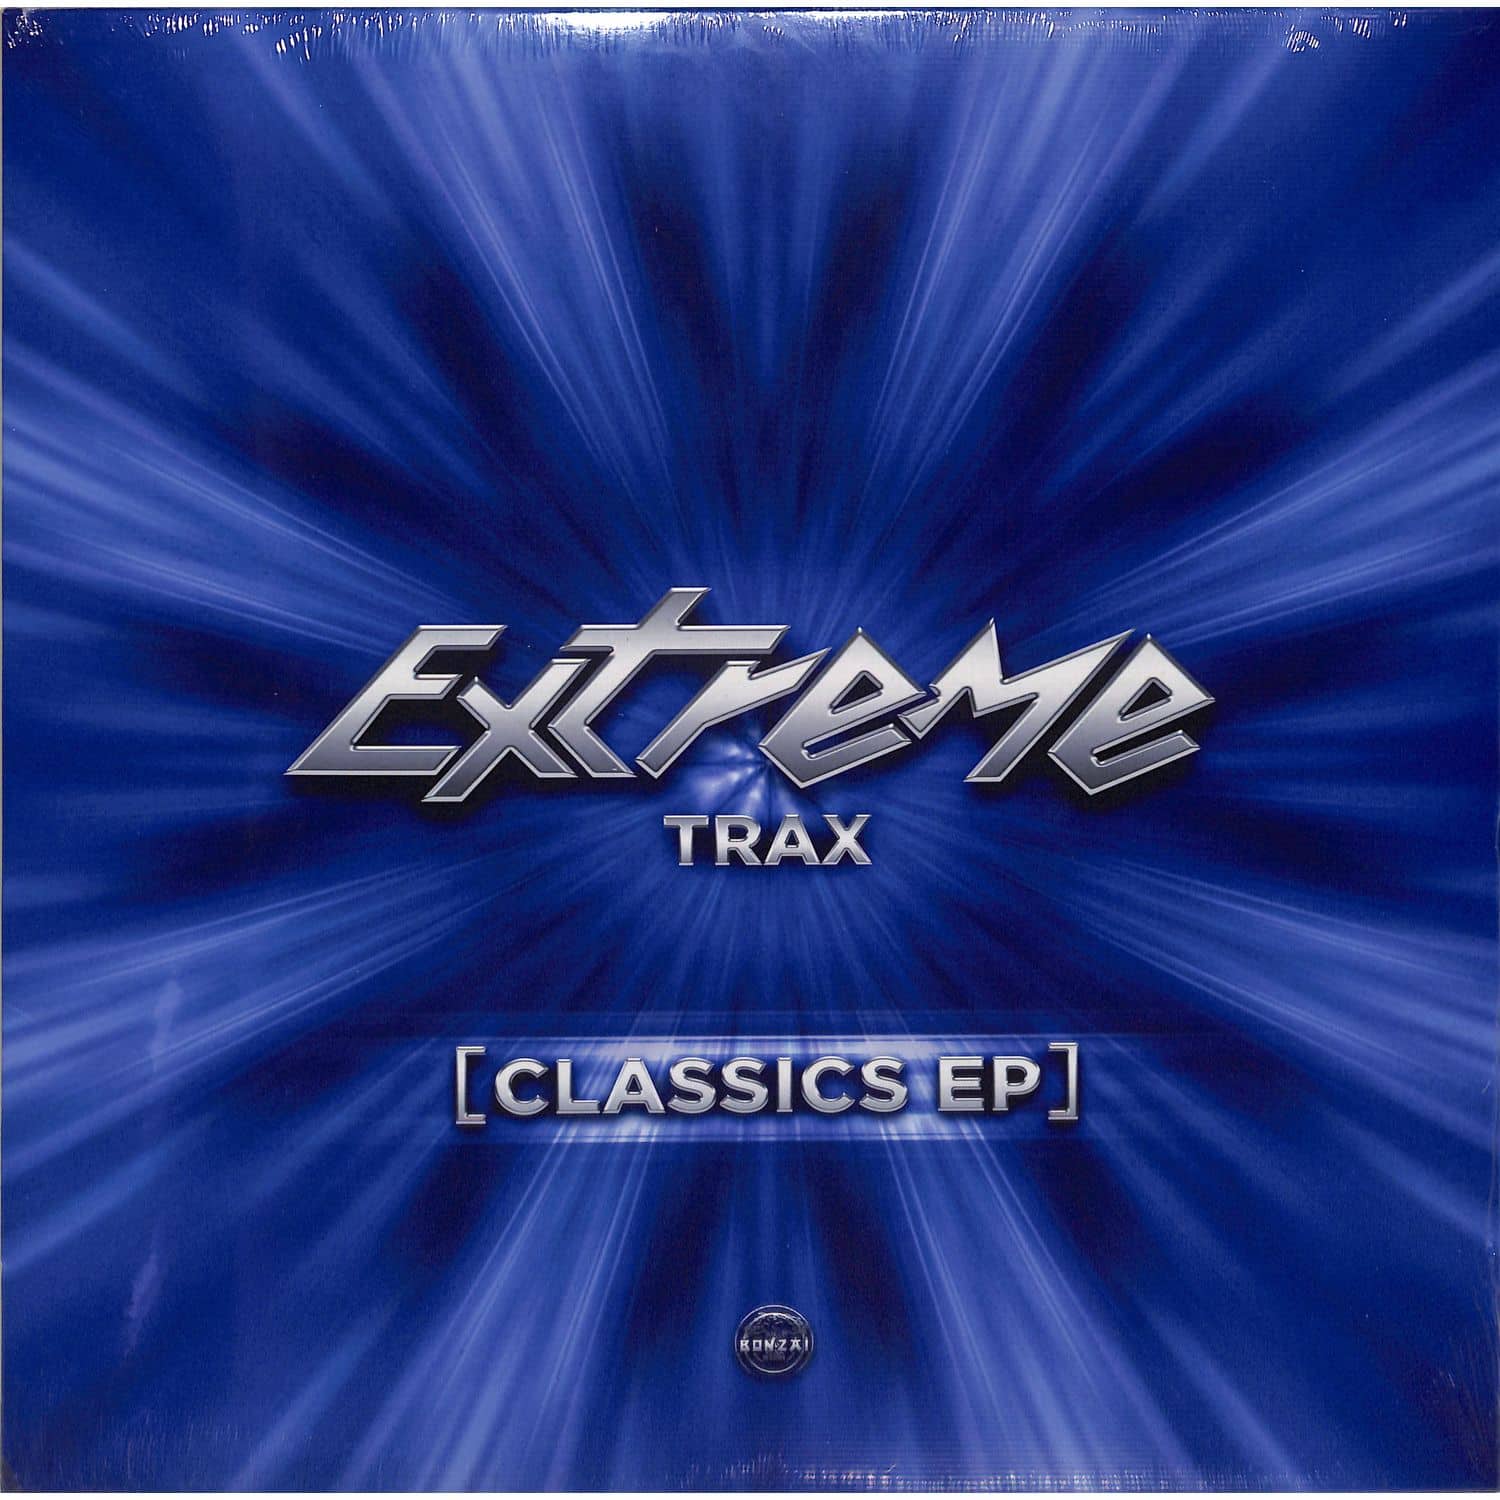 Extreme Trax - CLASSICS EP 